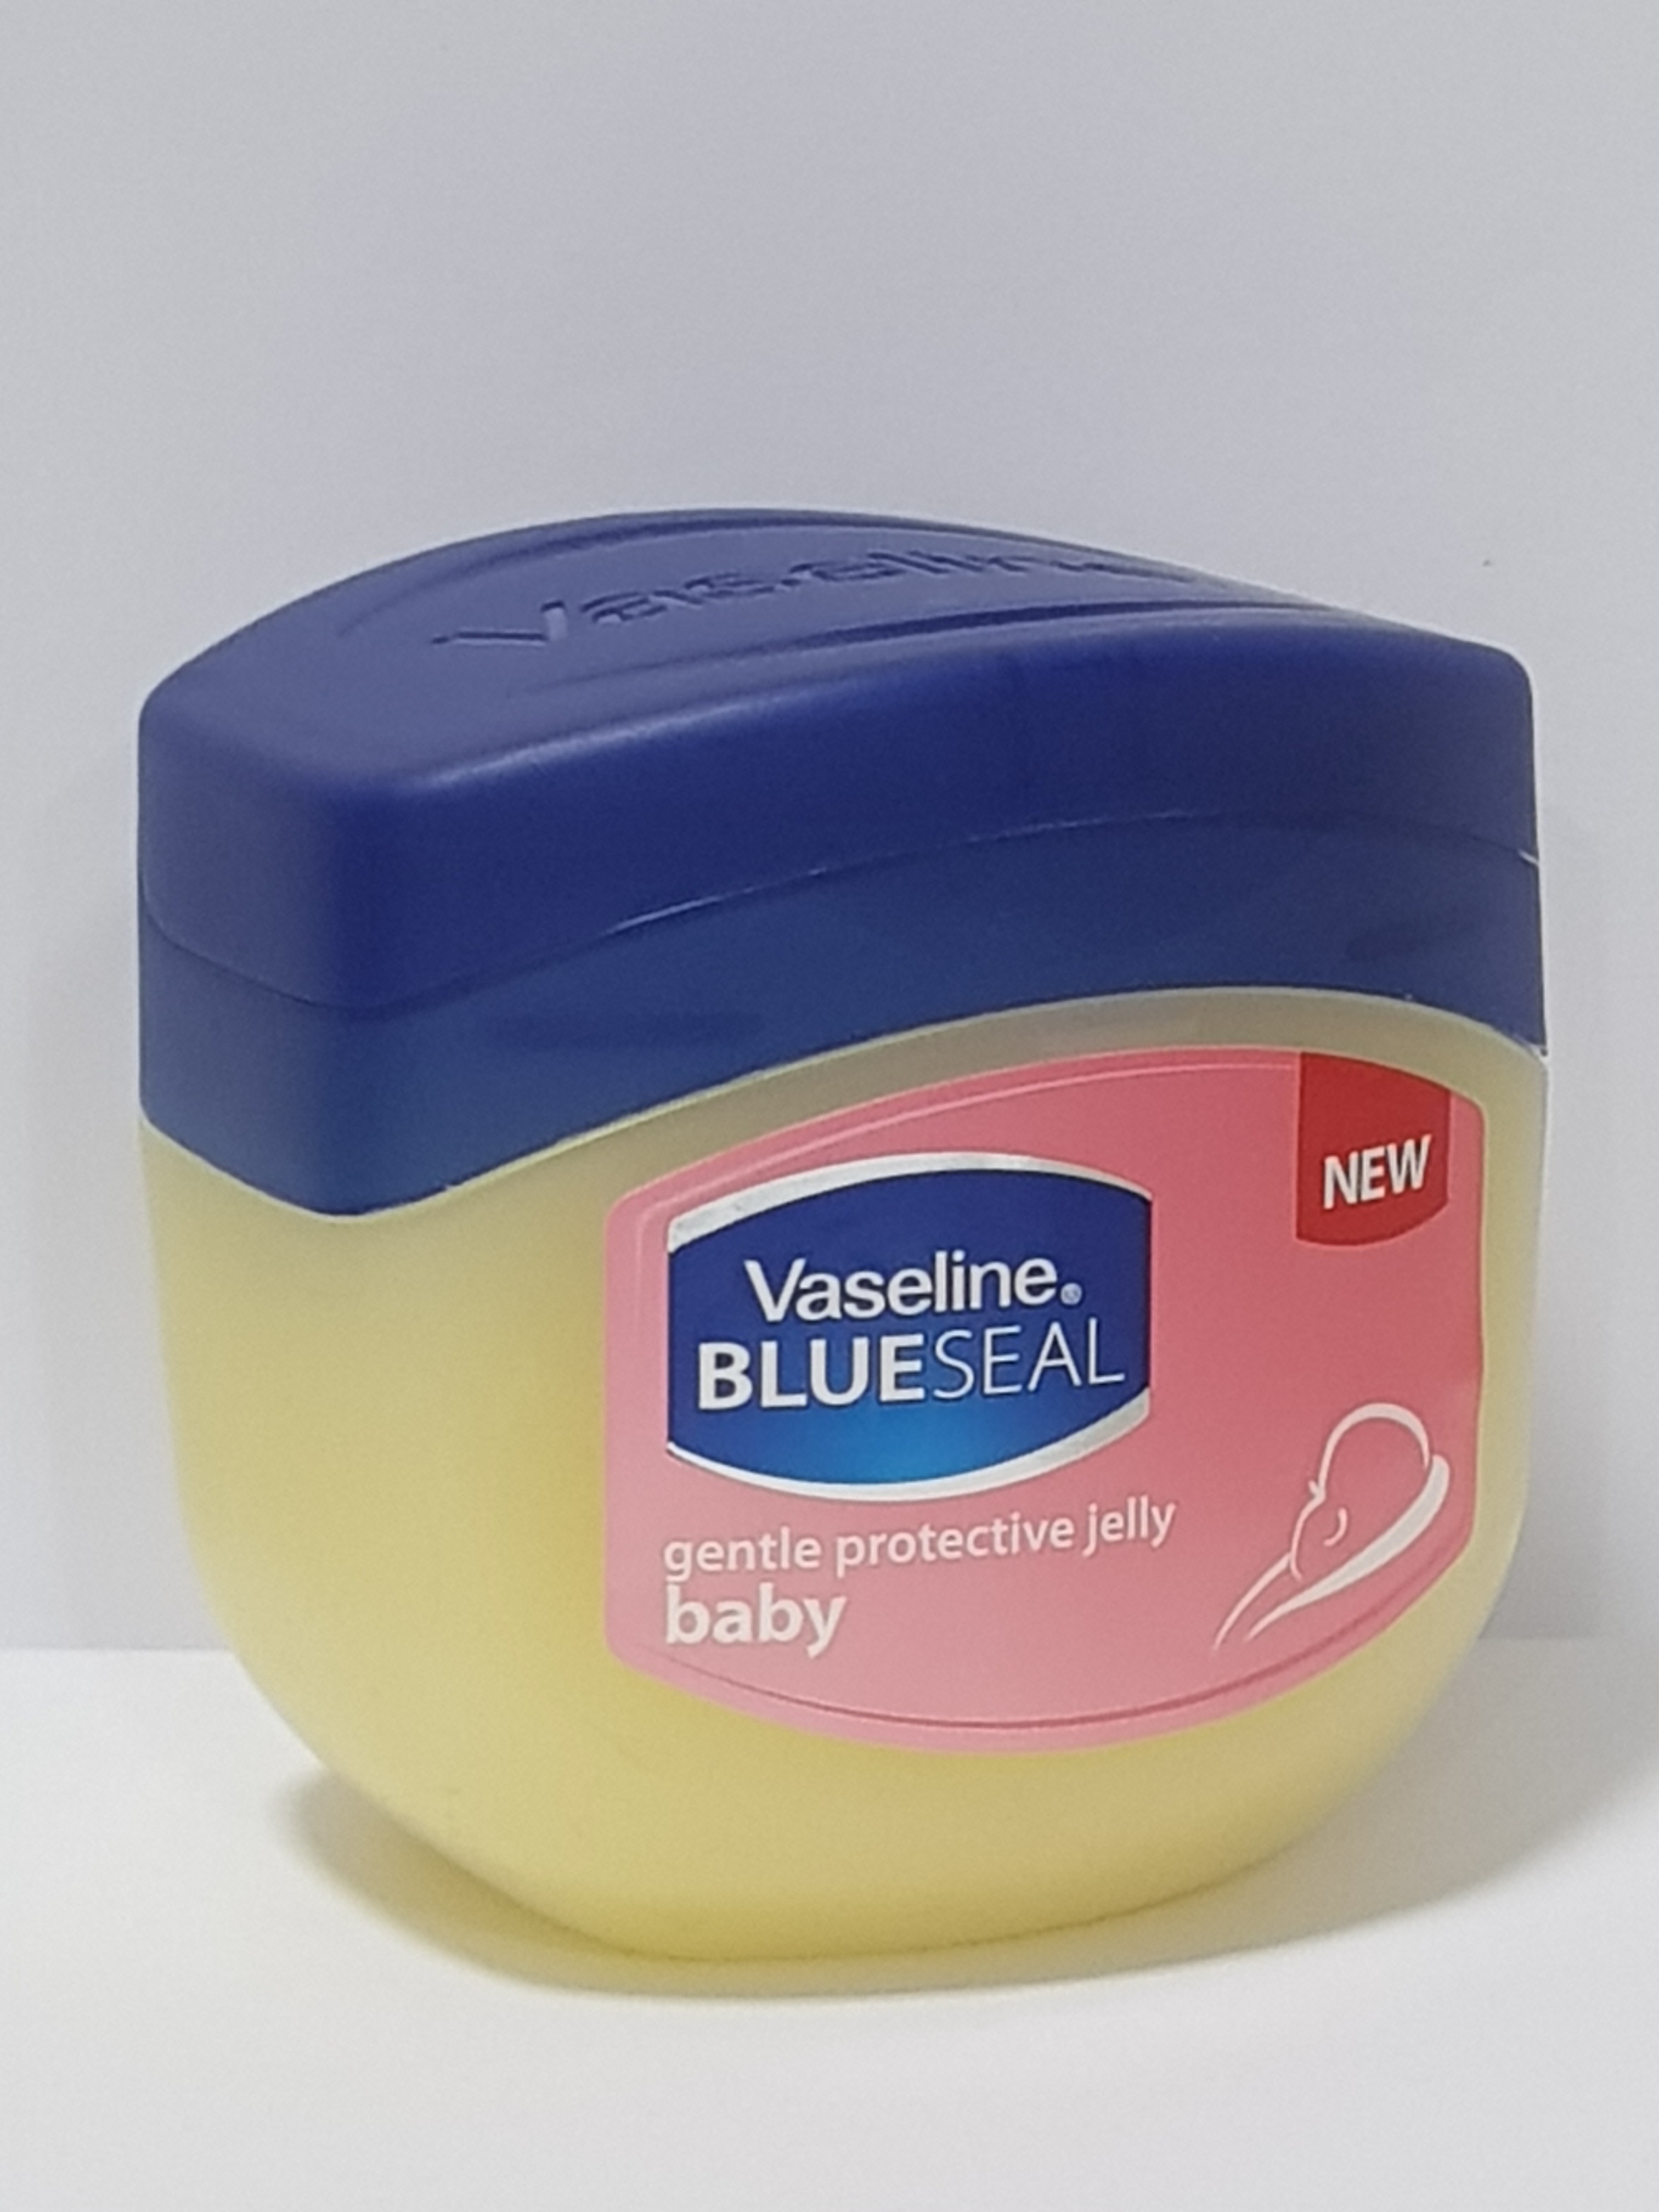 Vaseline. BLUESEAL  gentle protective jelly baby (250 ml)